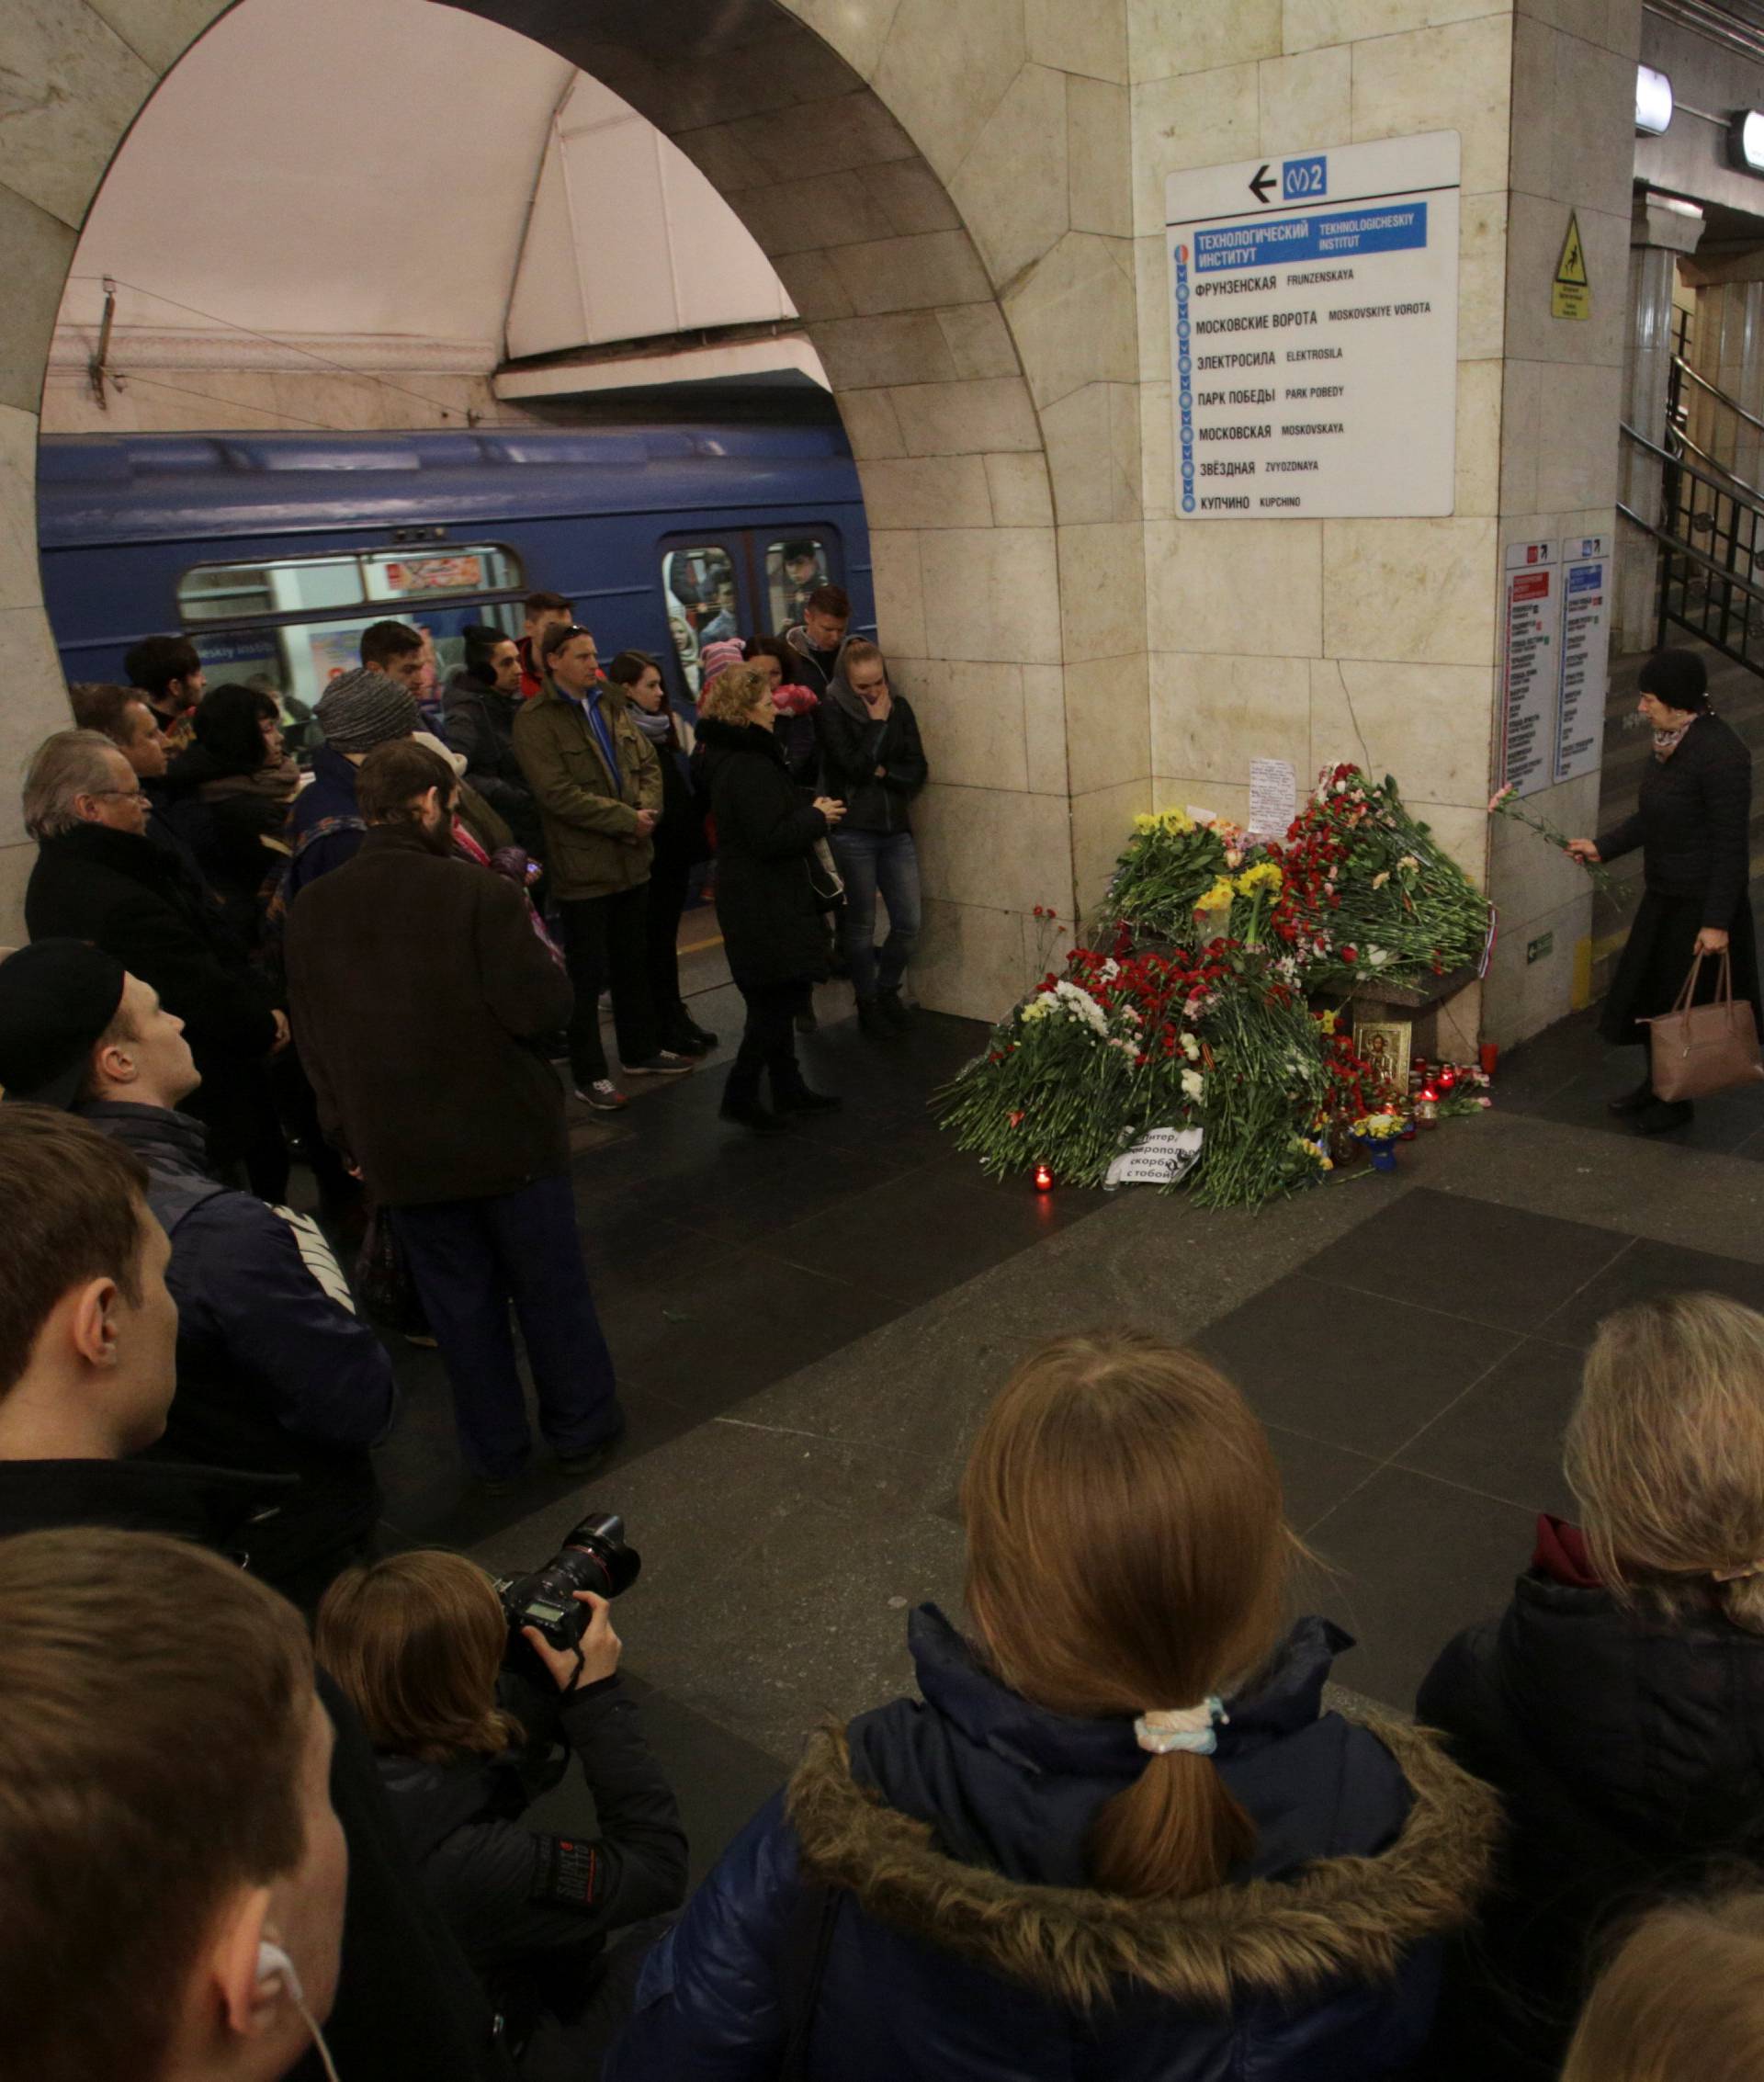 People mourn next to memorial site for victims of blast in St. Petersburg metro, at Tekhnologicheskiy institut metro station in St. Petersburg